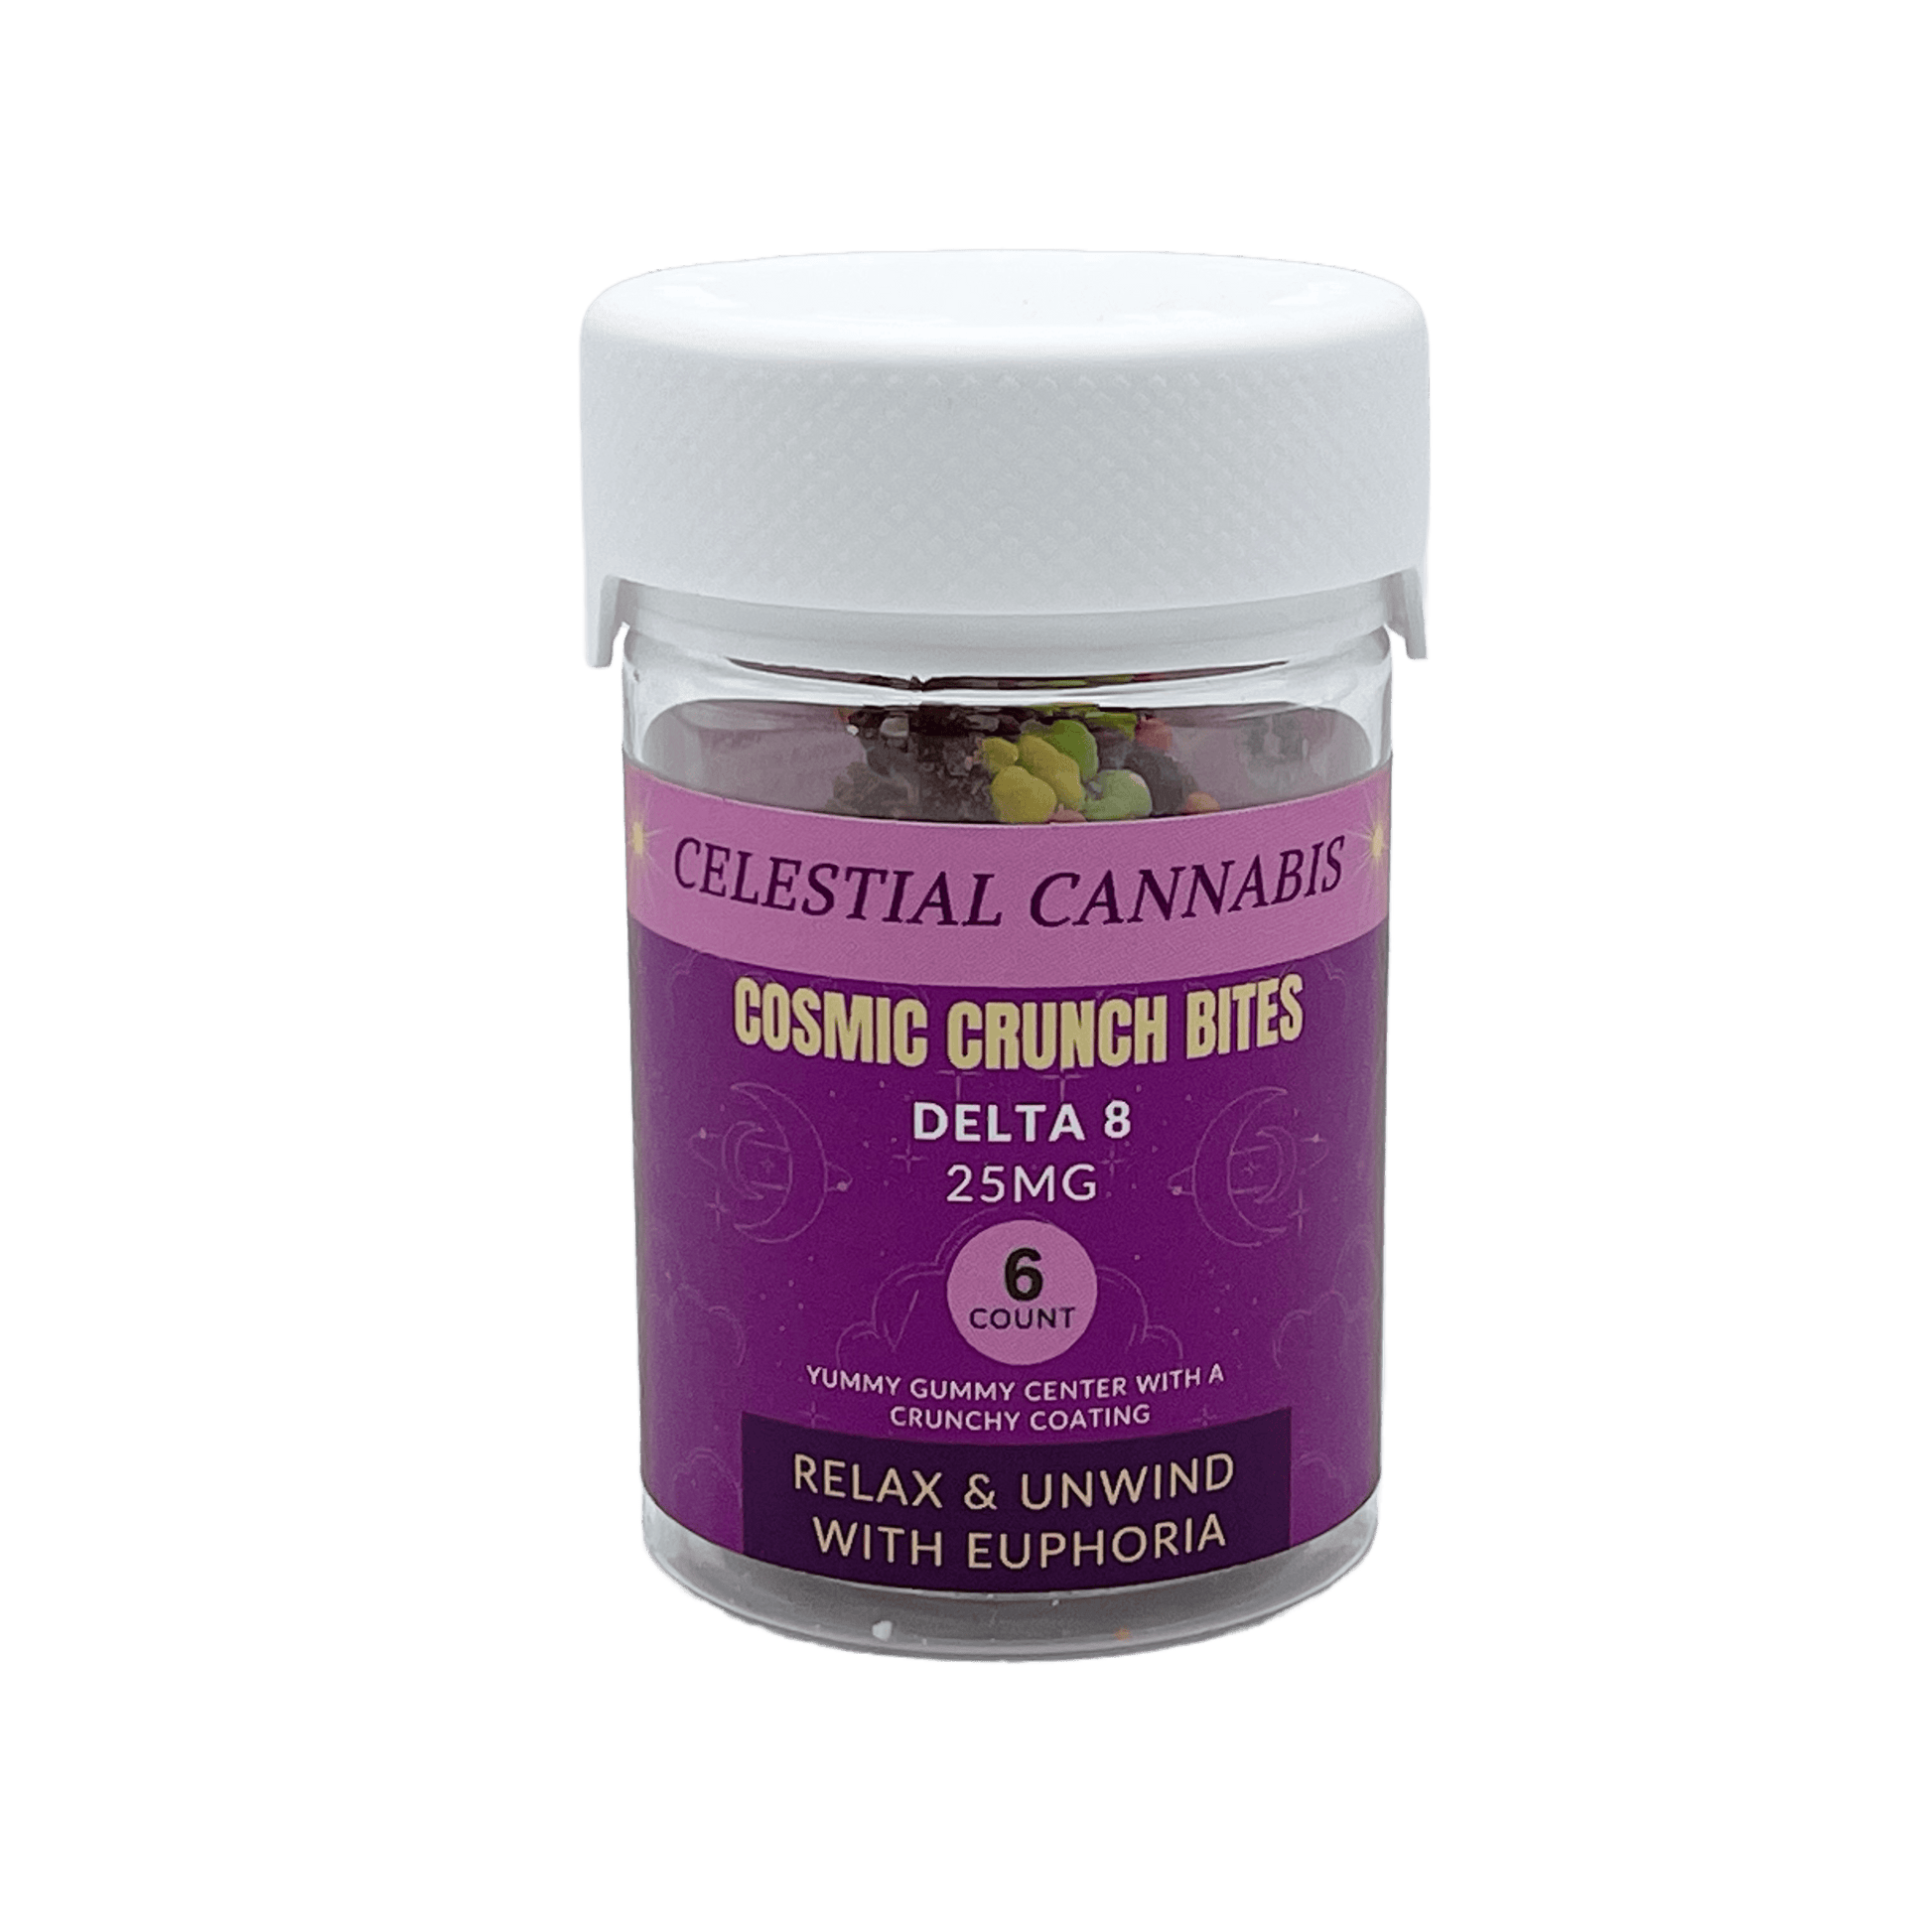 Celestial Cannabis Delta 8 Cosmic Crunch Bites 6ct